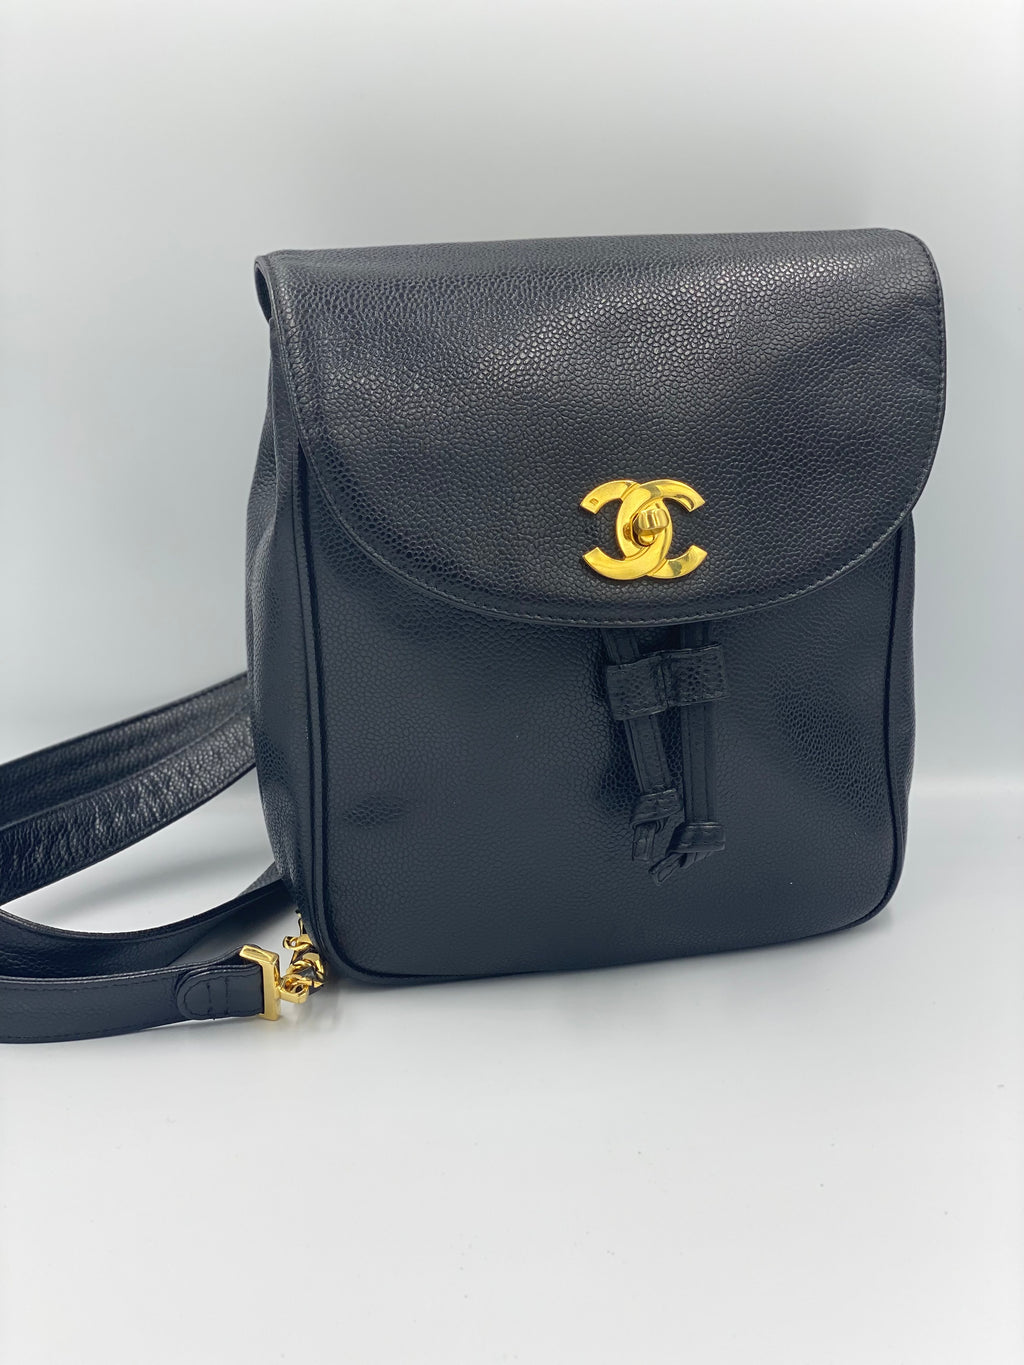 Chanel Black Caviar Jumbo Vertical Stitch Classic Flap Bag 74701